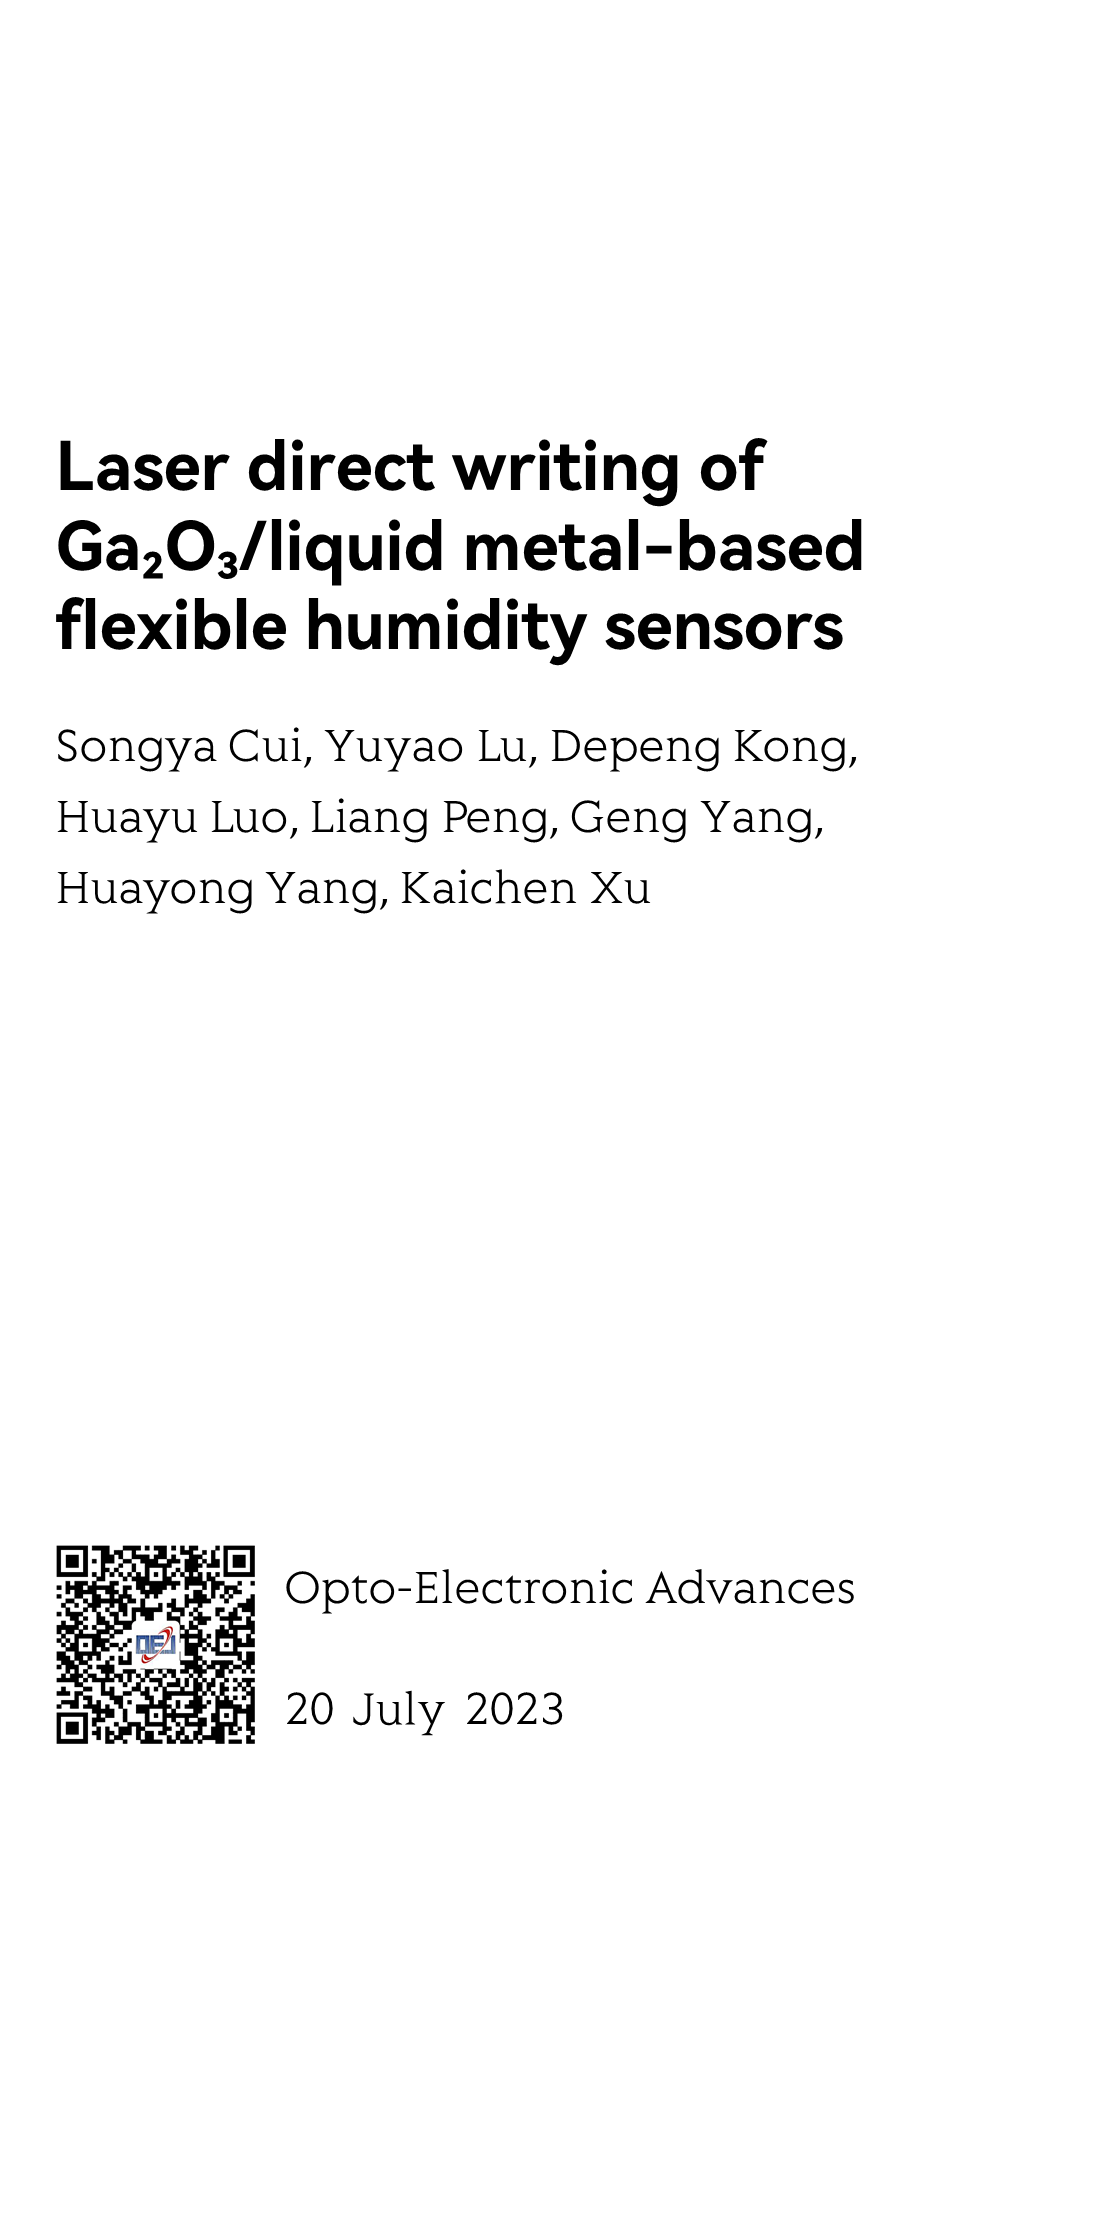 Laser direct writing of Ga₂O₃/liquid metal-based flexible humidity sensors_1